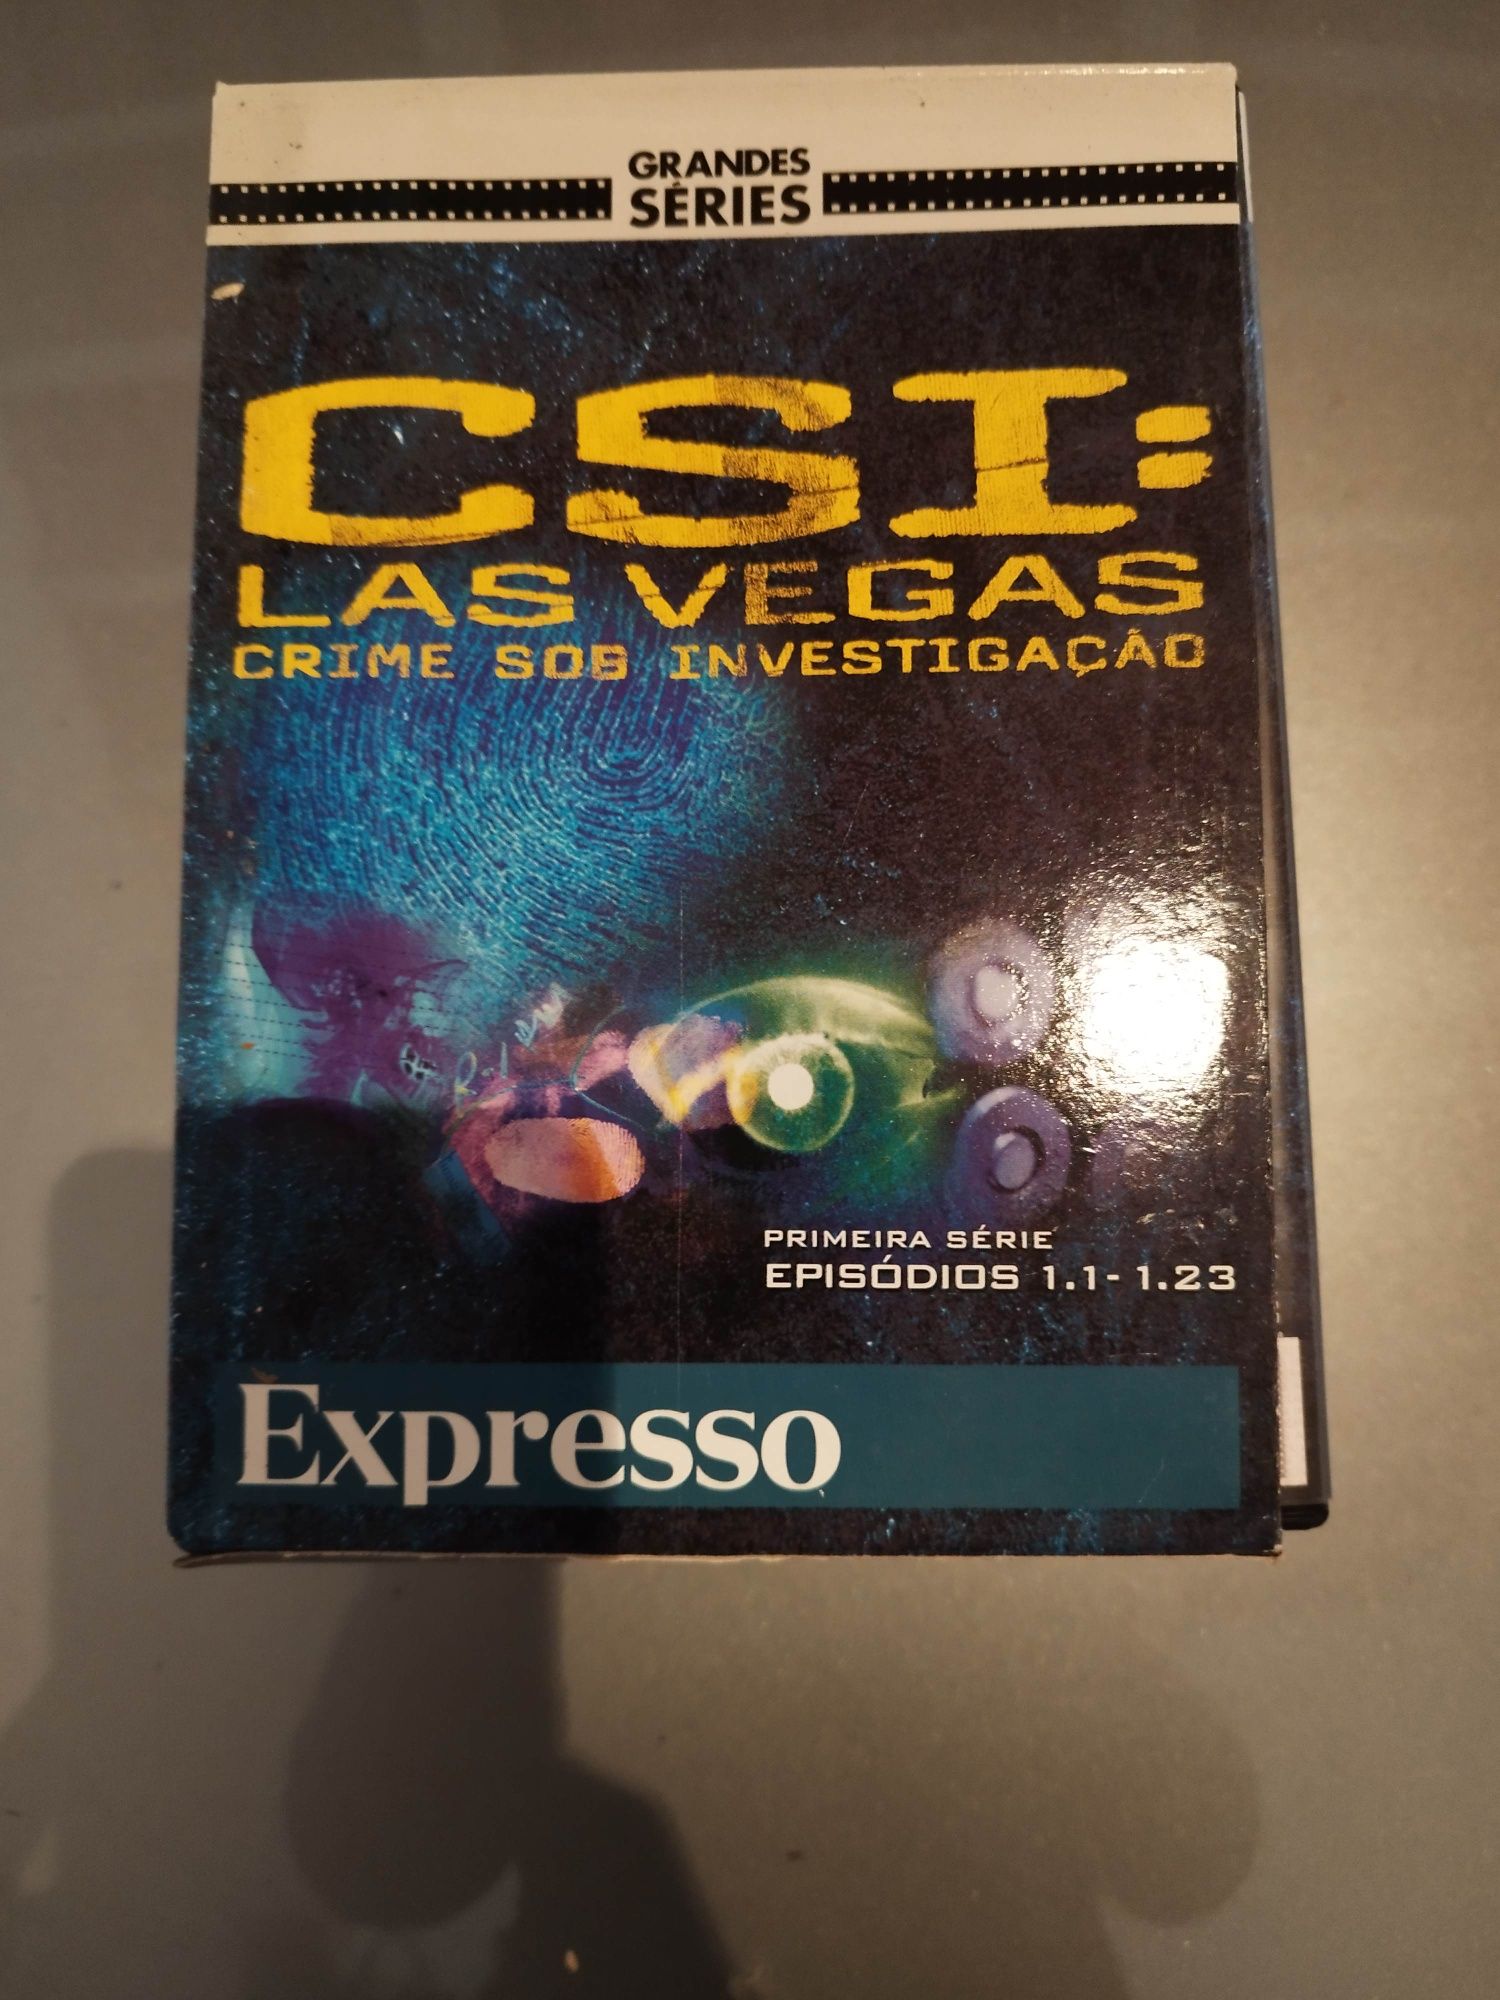 DVDs Serie CSI Las Vegas